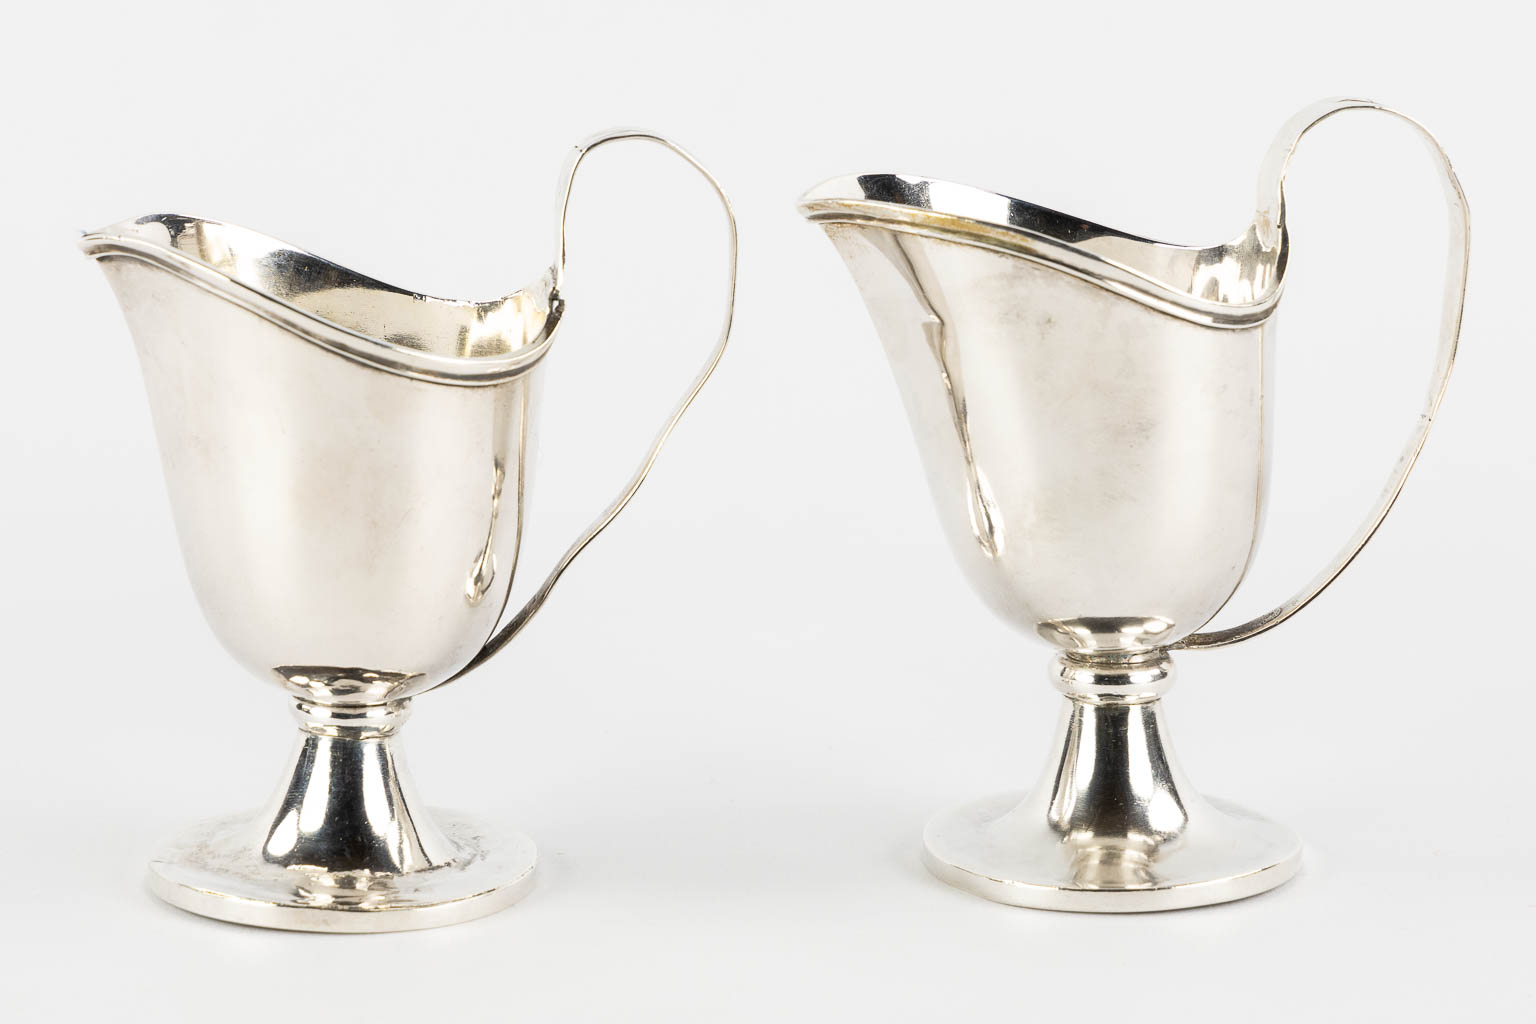 Philippus MYS 1759-1847) A pair of 'Water and Wine Cruets', Vino & Aqua, Silver, Bruges. 19th C. (L:11 x W:6,5 x H